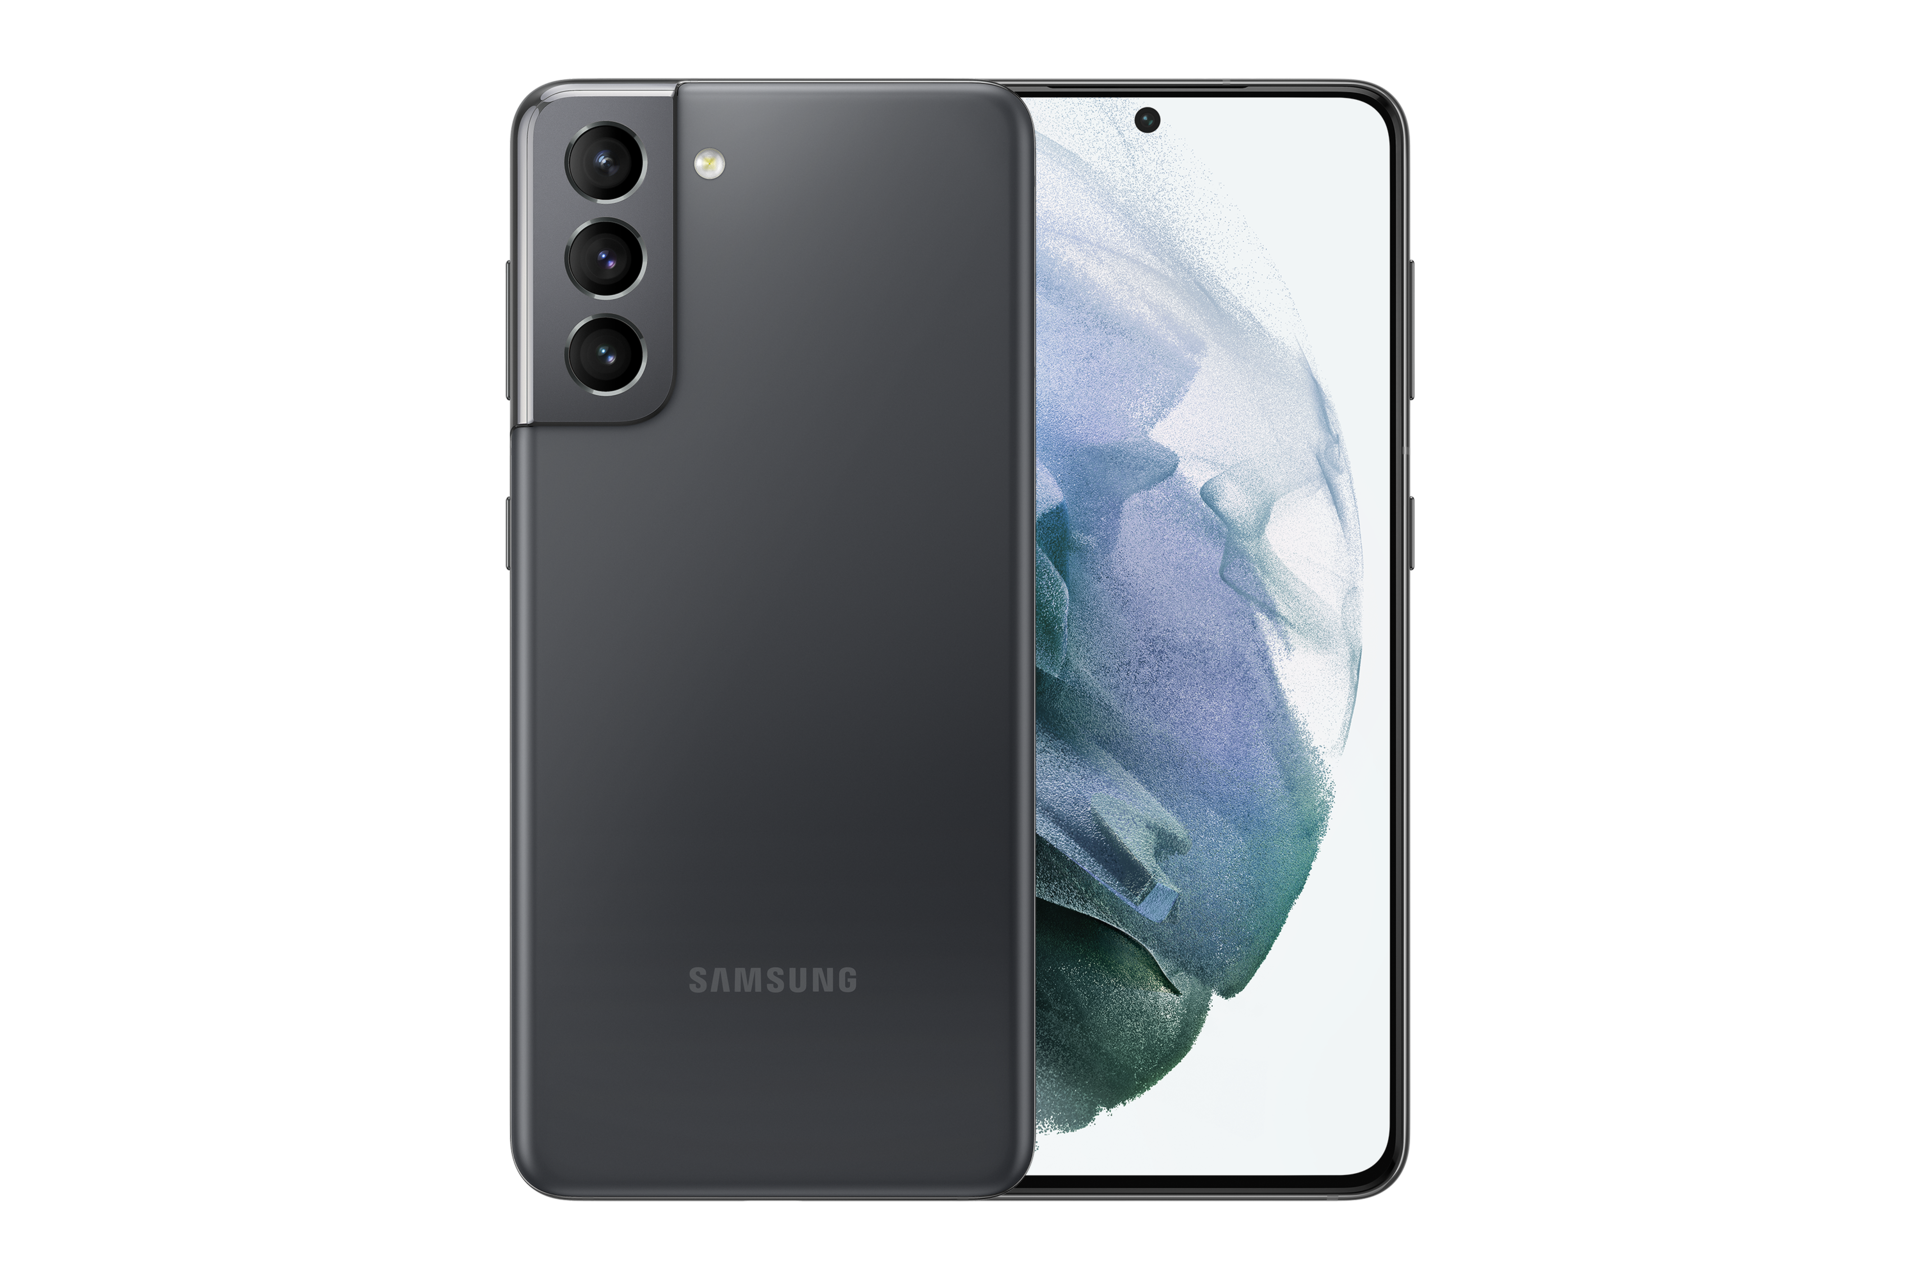 Buy Galaxy S21 5g Phantom Gray 128 Gb Samsung India